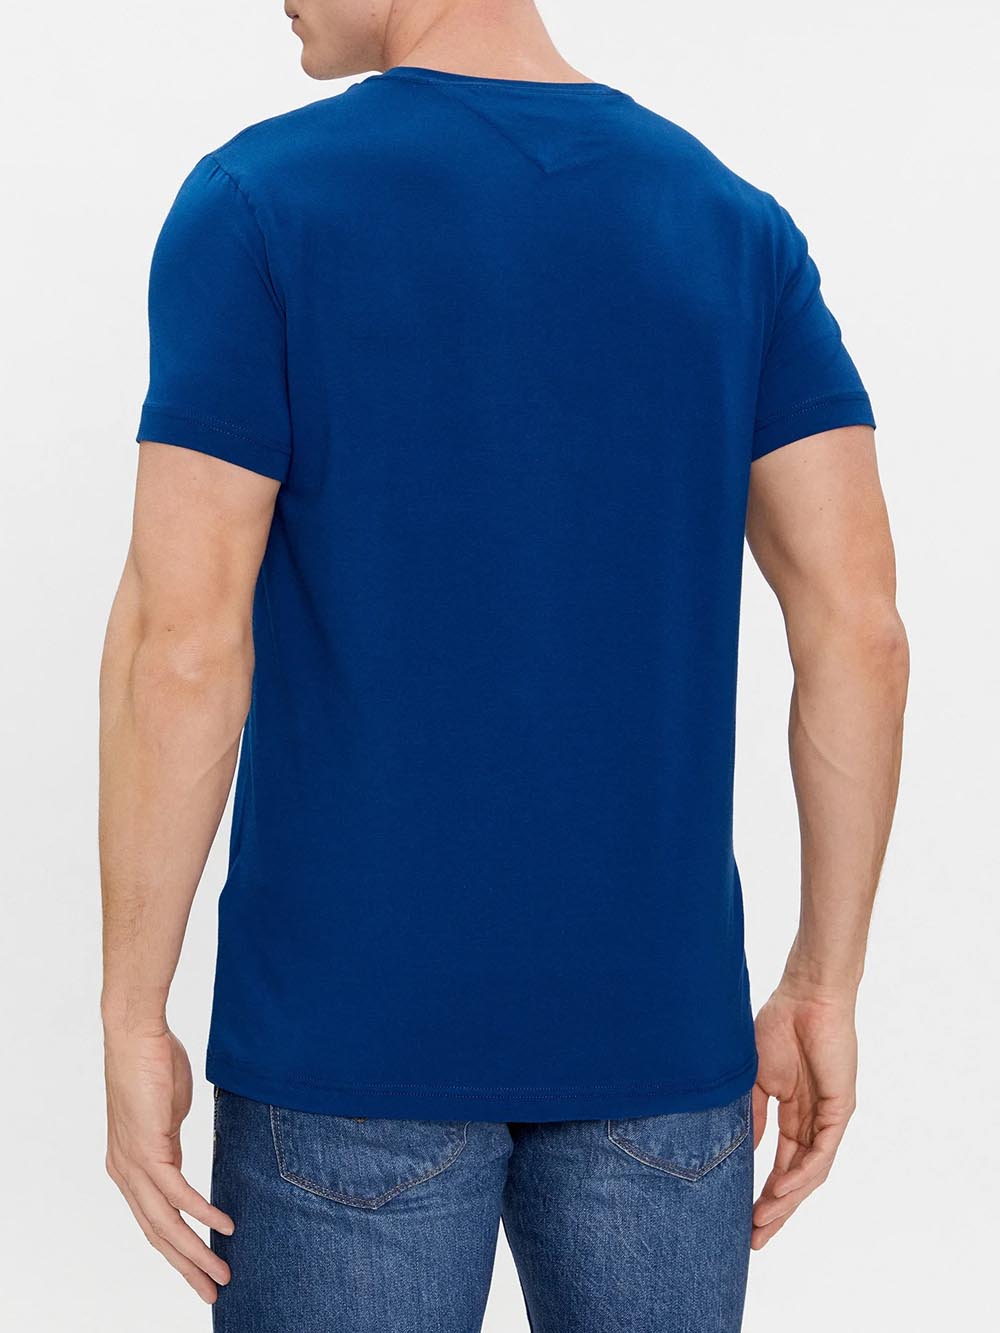 Tommy Hilfiger T-shirt Uomo Mw0mw10800 Bluette